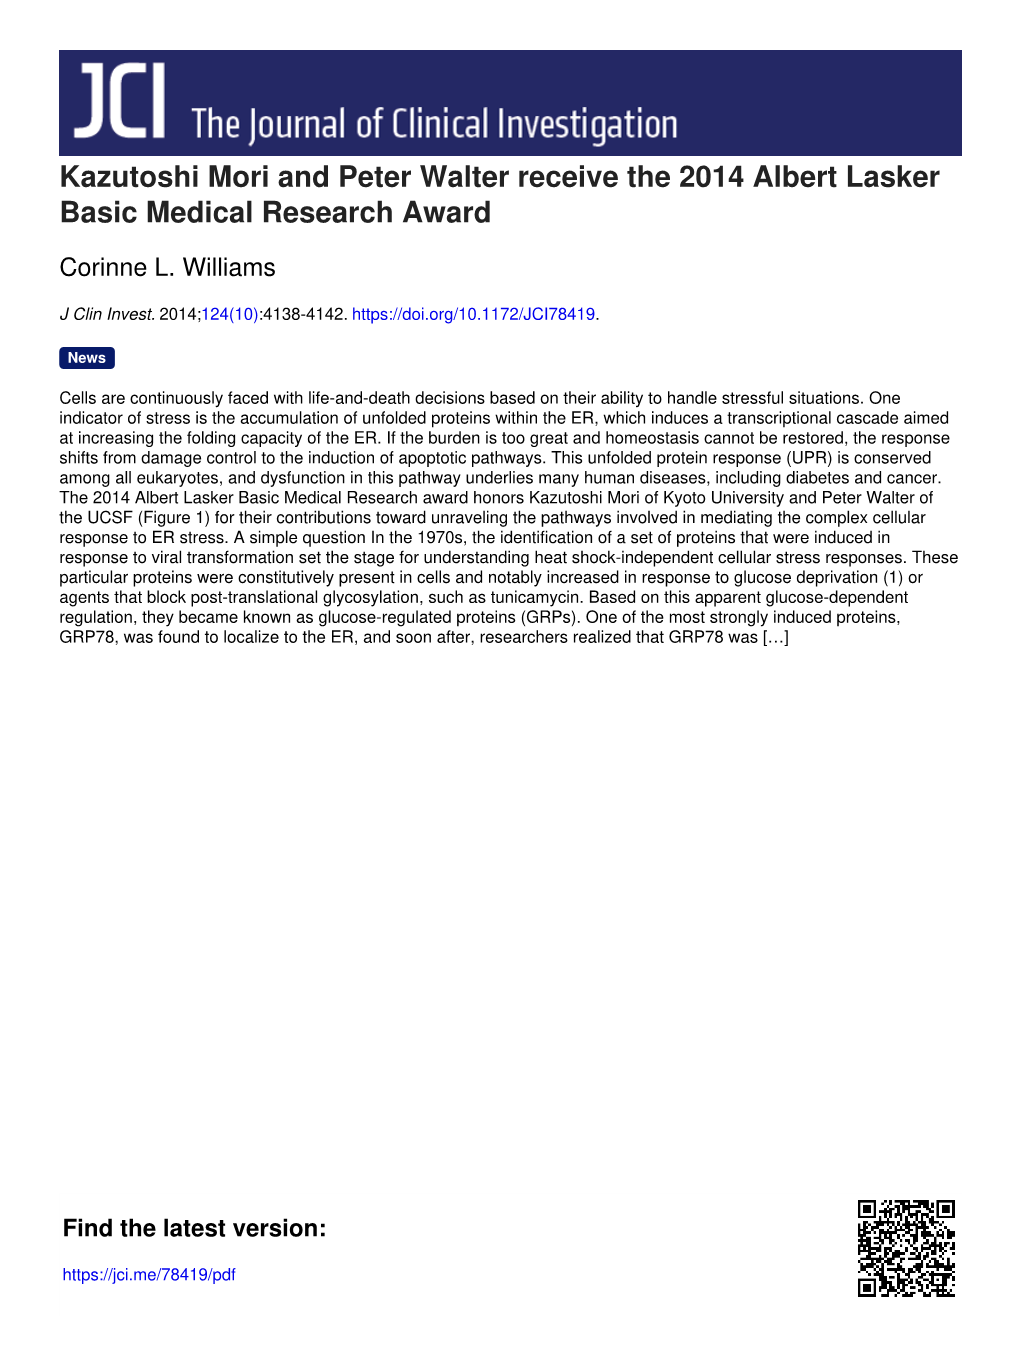 Kazutoshi Mori and Peter Walter Receive the 2014 Albert Lasker Basic Medical Research Award